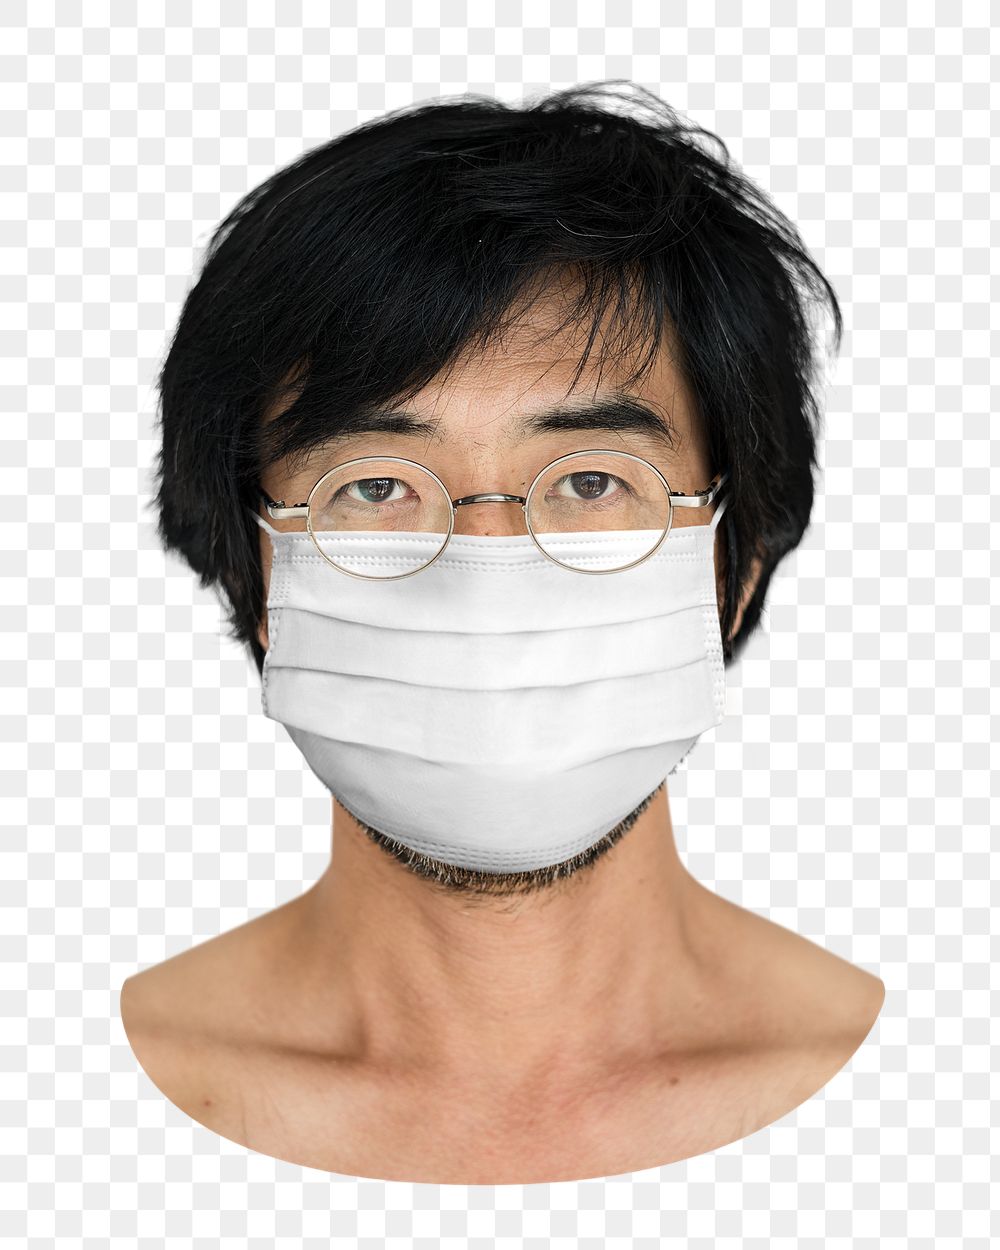 Asian man png wearing face mask, transparent background